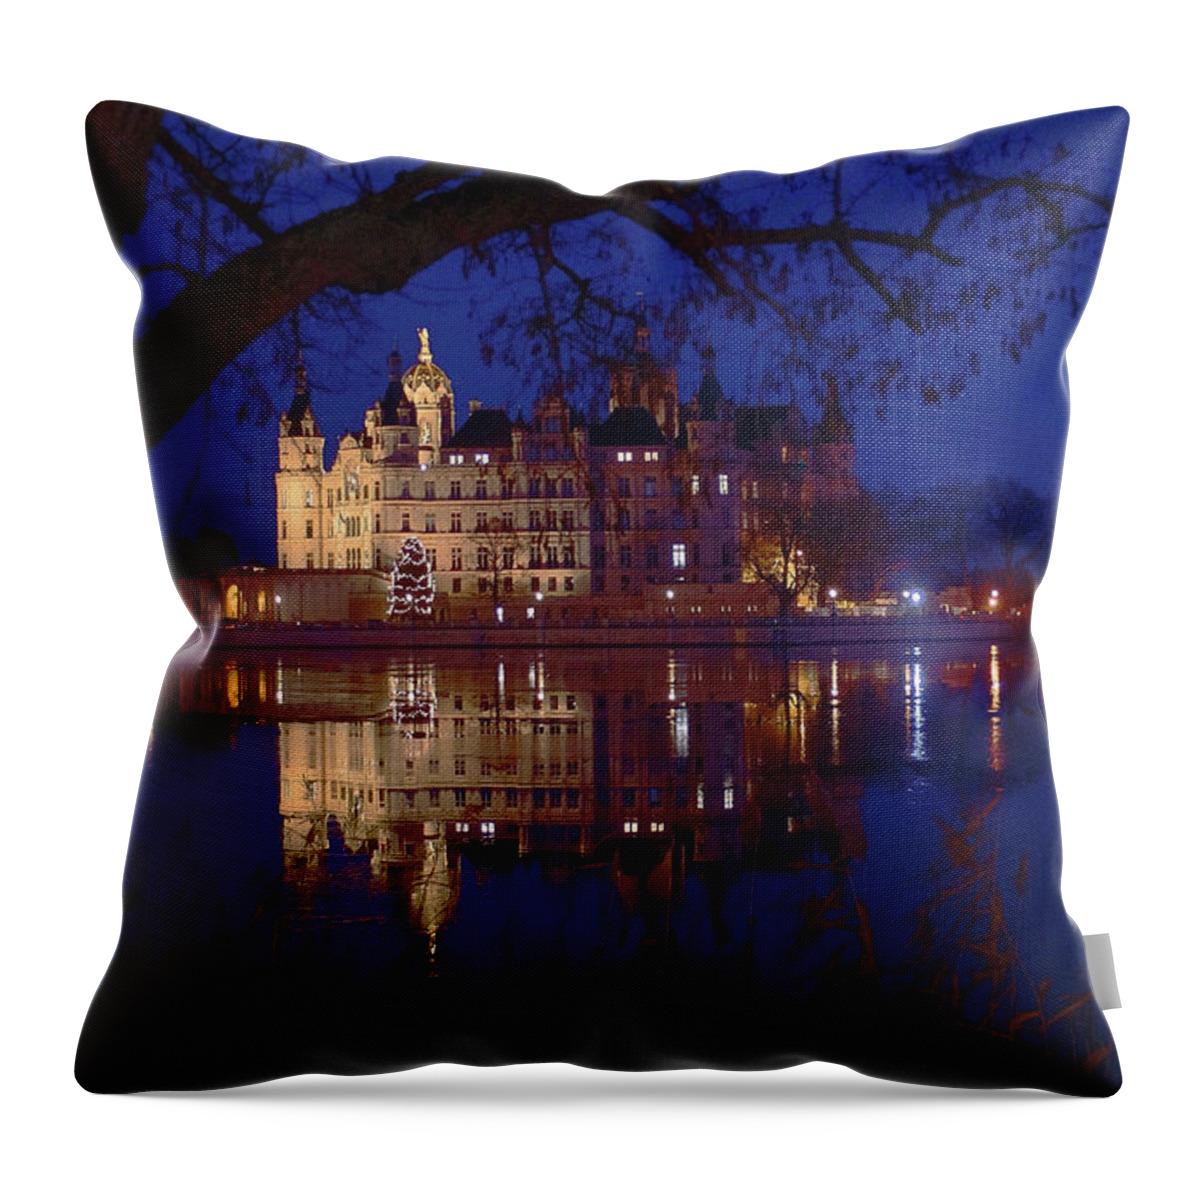 Prott Throw Pillow featuring the photograph Schwerin Castle 5 by Rudi Prott